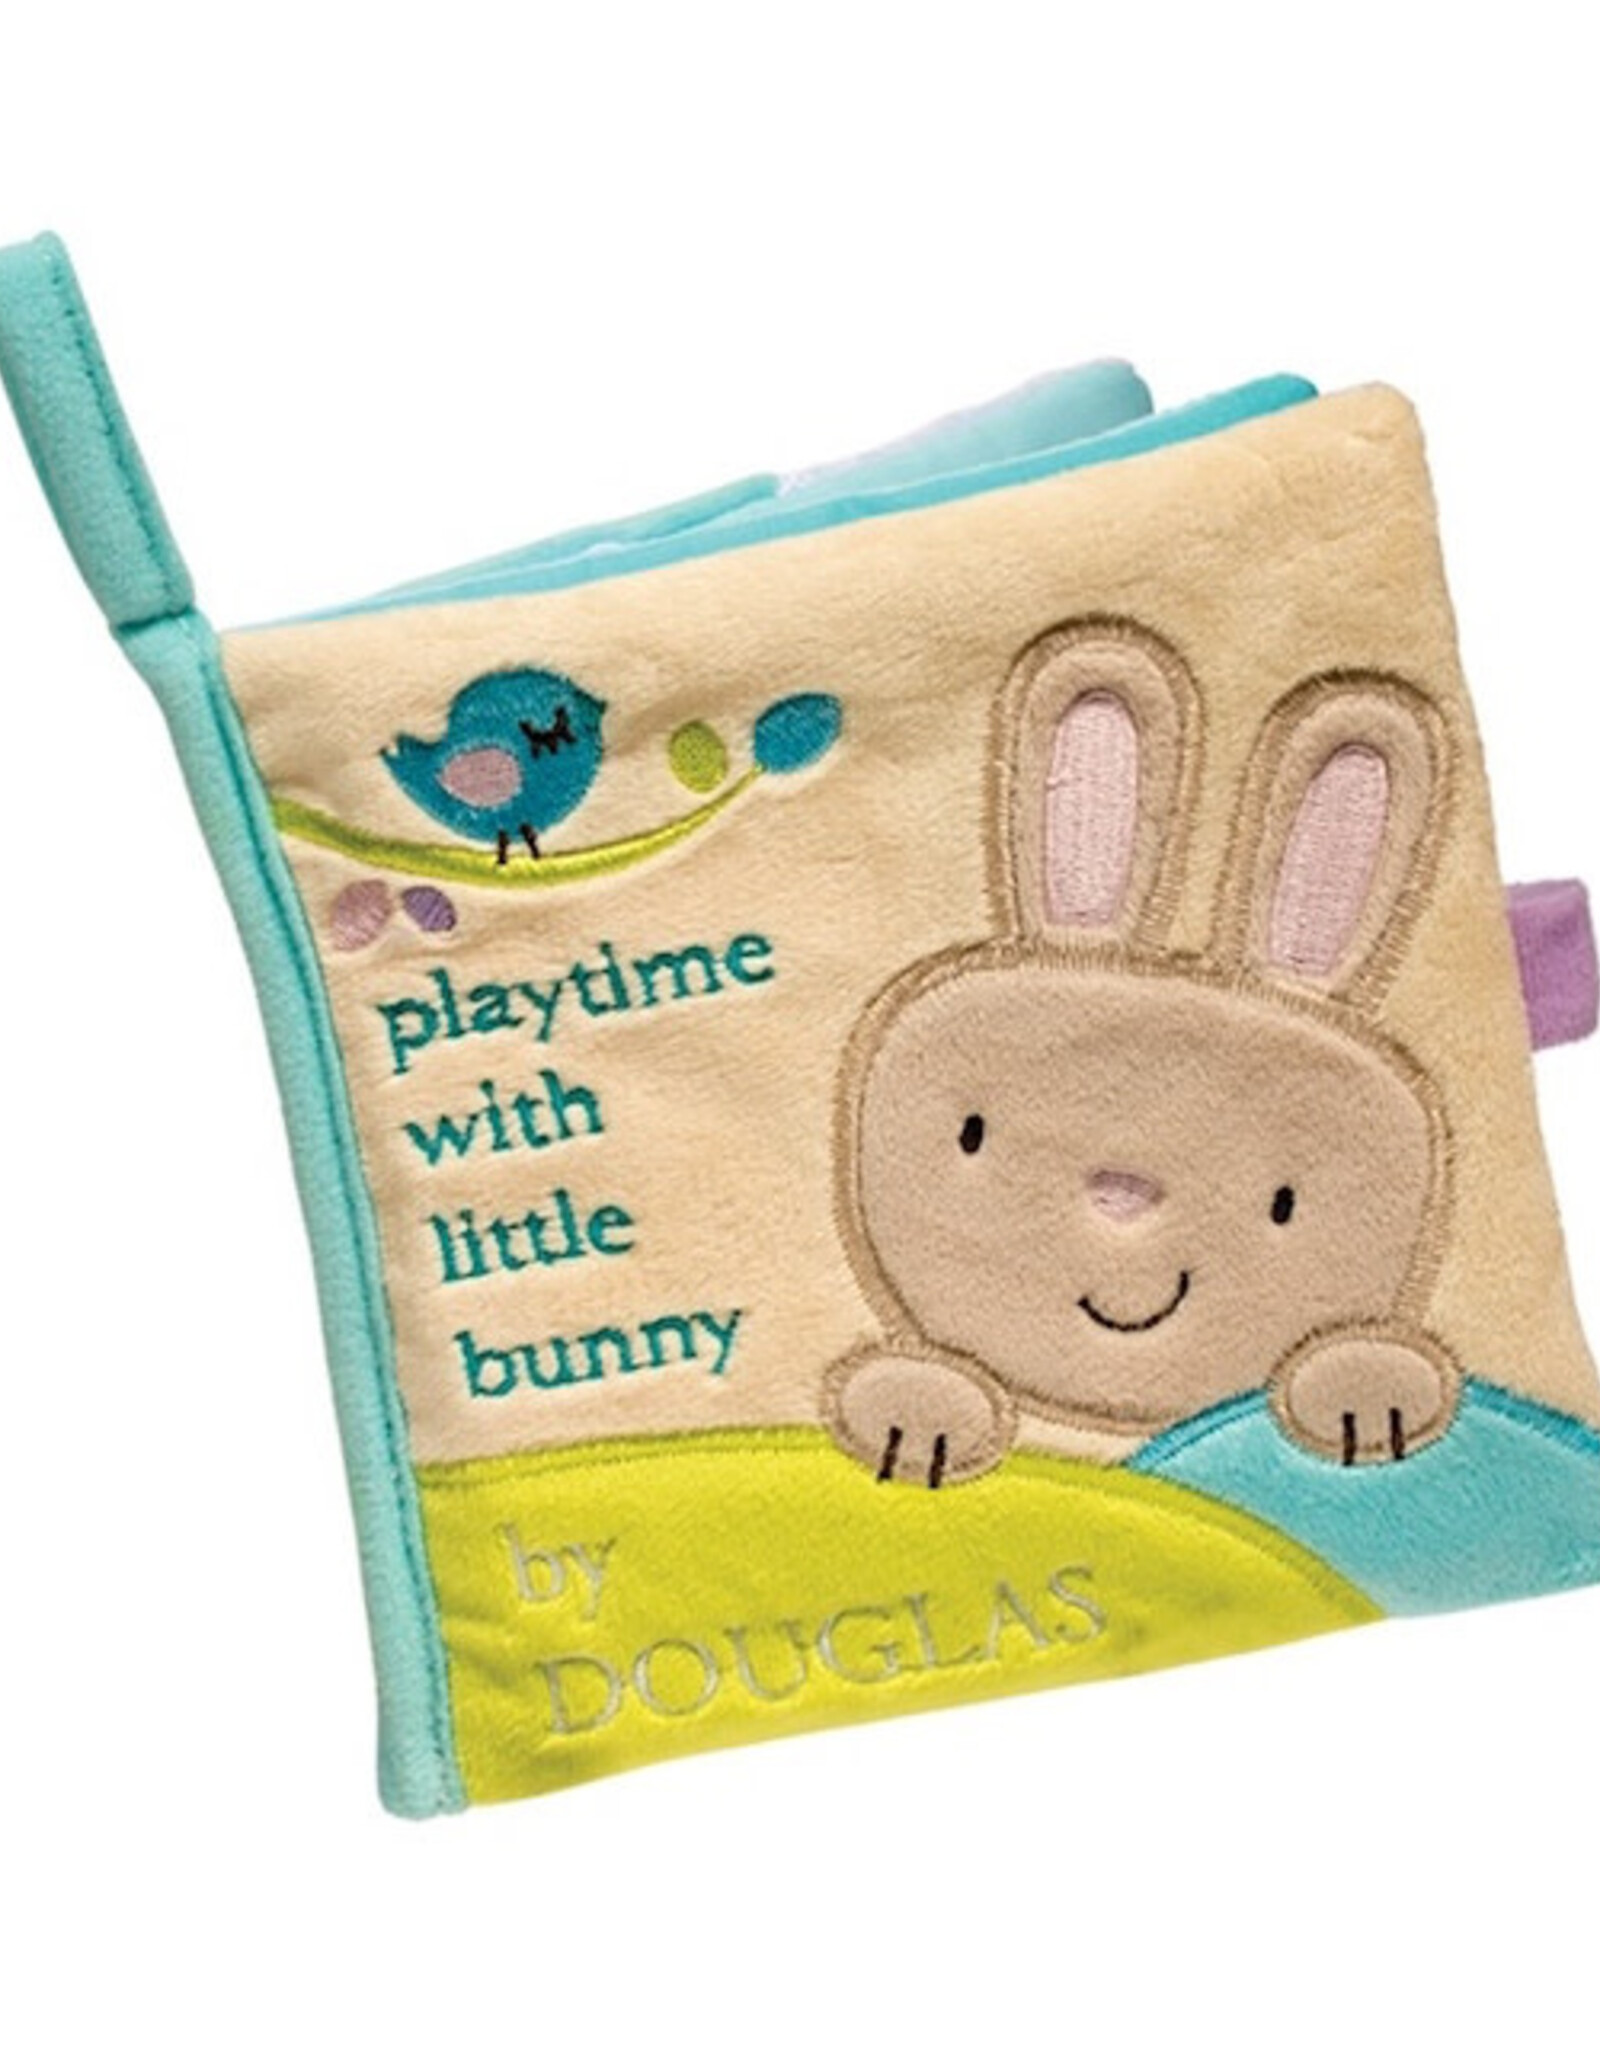 Douglas Toys Baby Activity Book